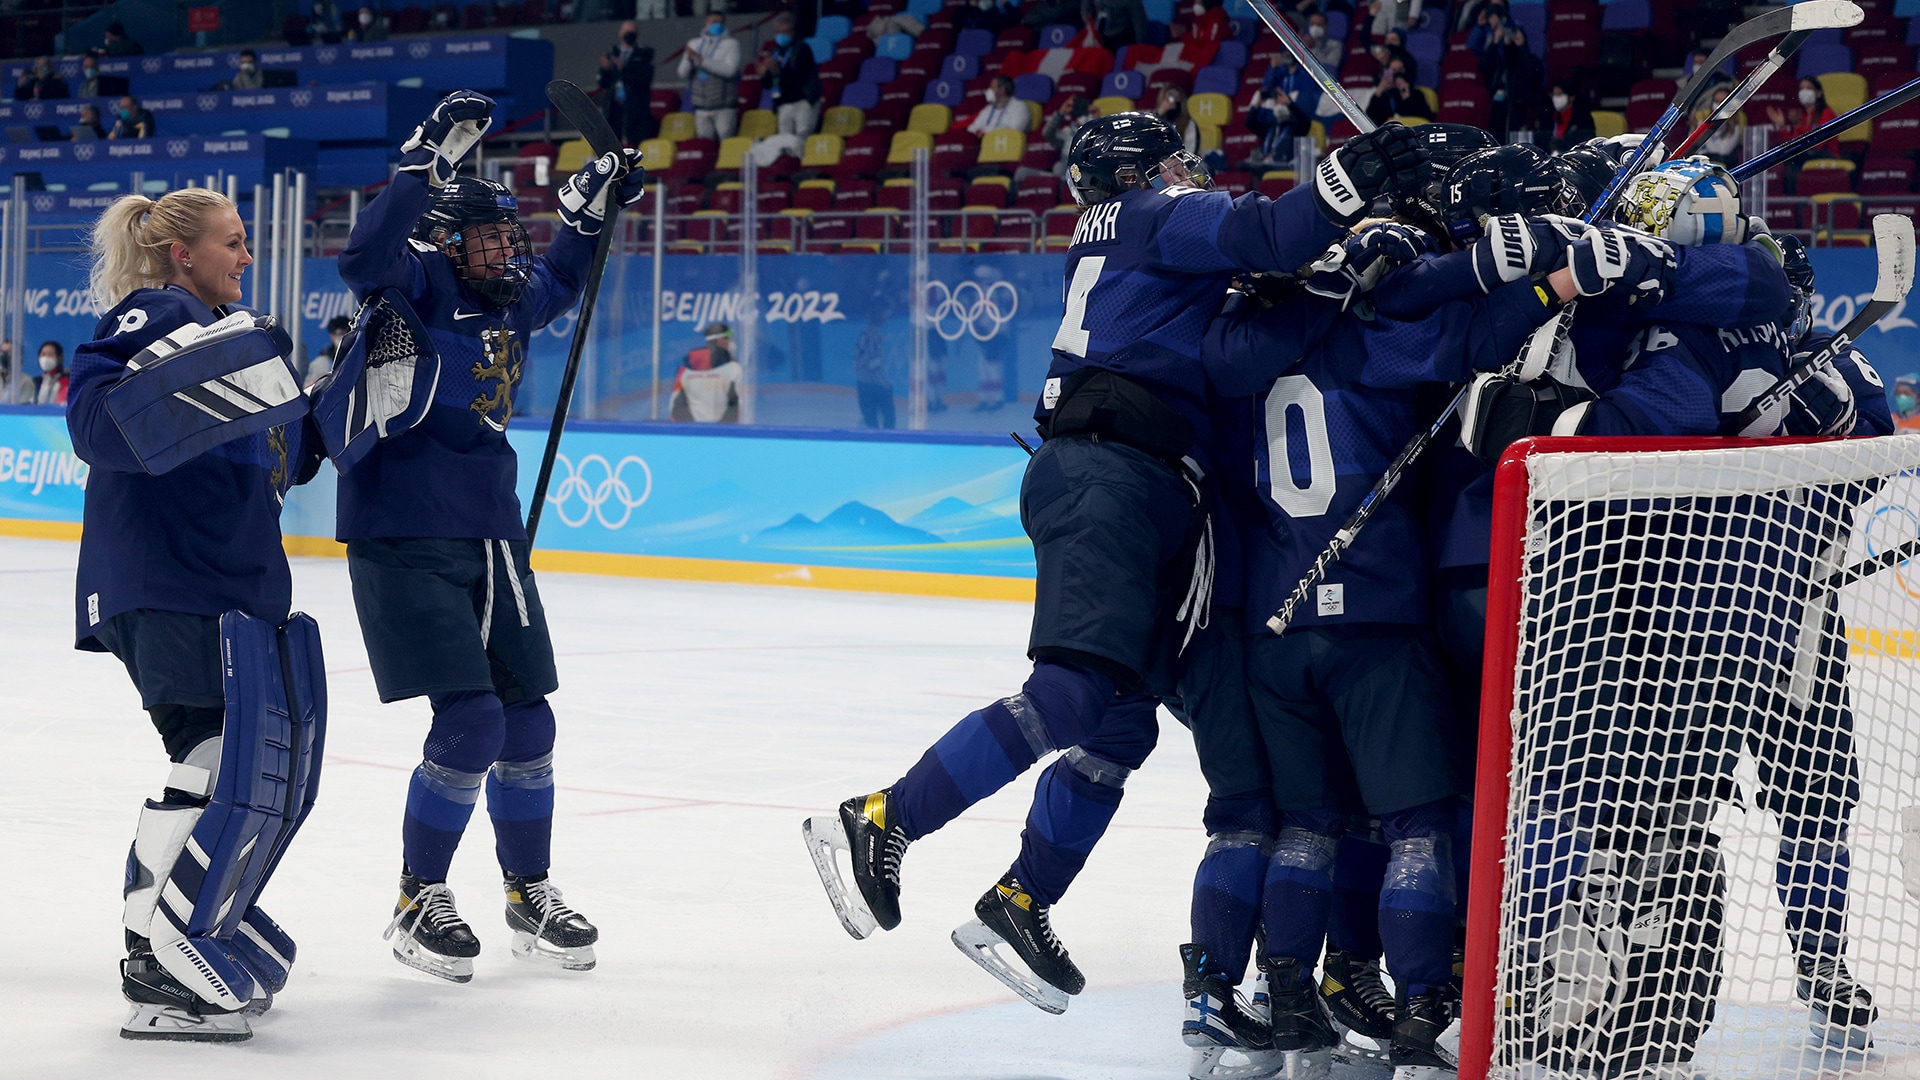 Finland blanks Switzerland 4-0 to win Olympic bronze in women's